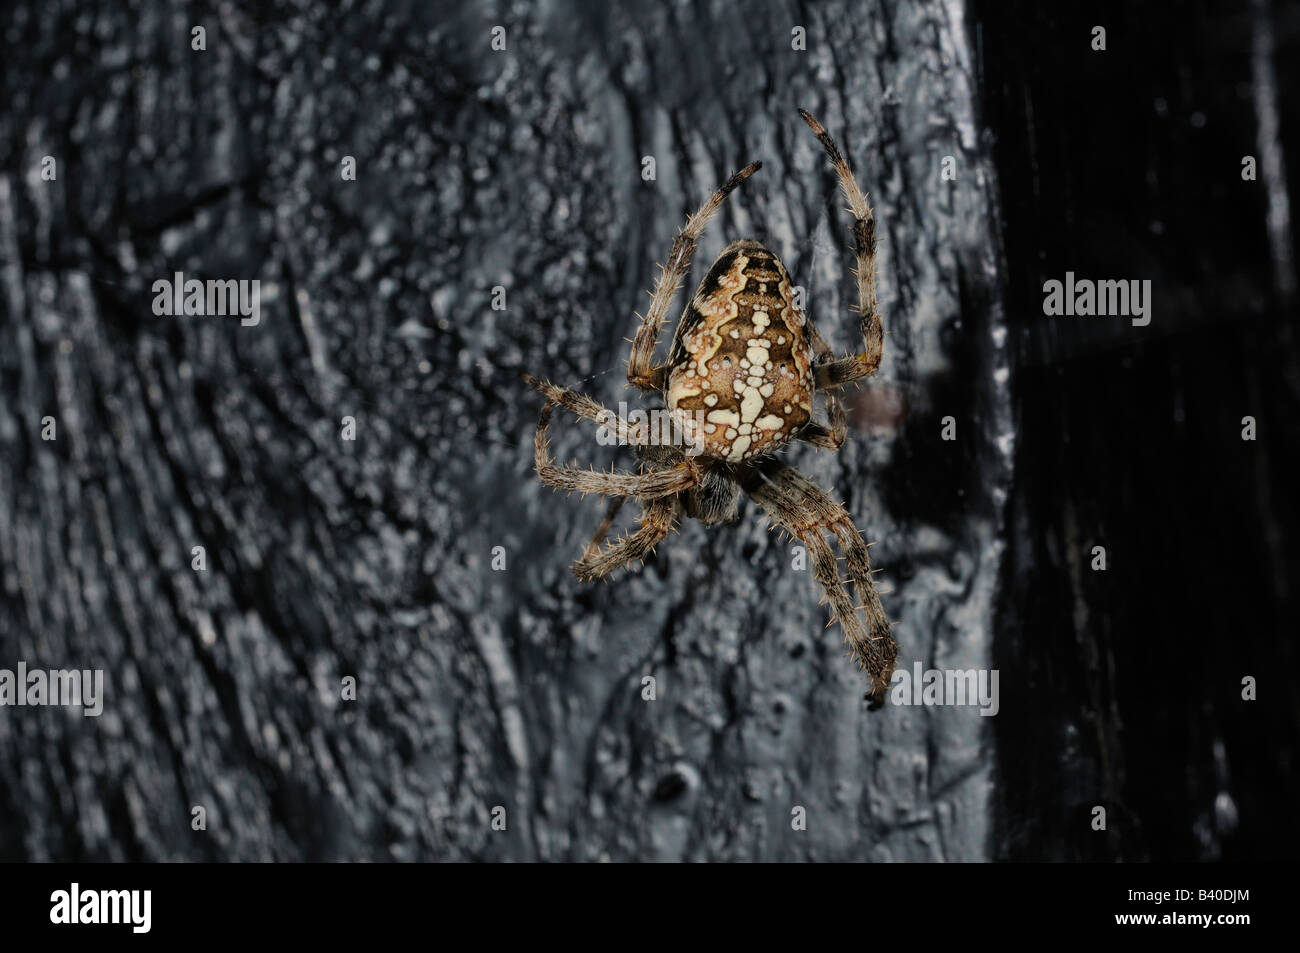 The European garden spider Araneus diadematus or diadem spider also called the cross spider Stock Photo